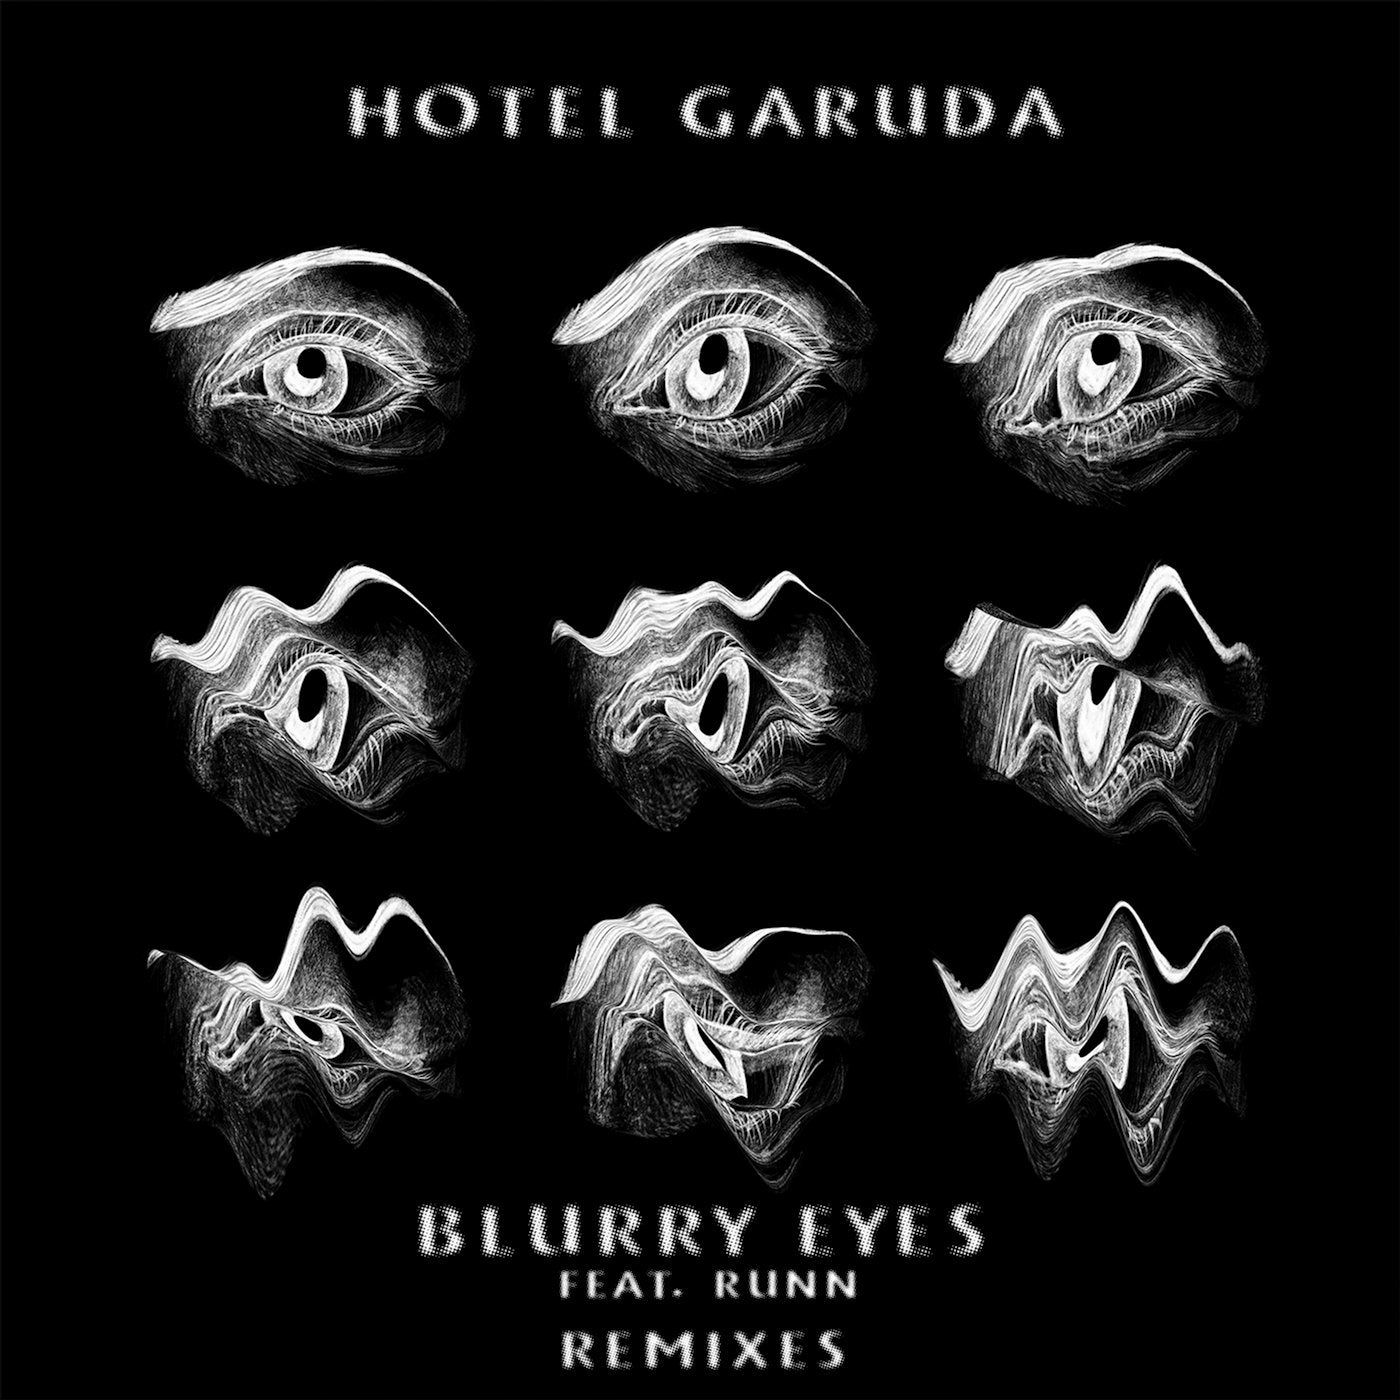 Blurry Eyes (Remixes)